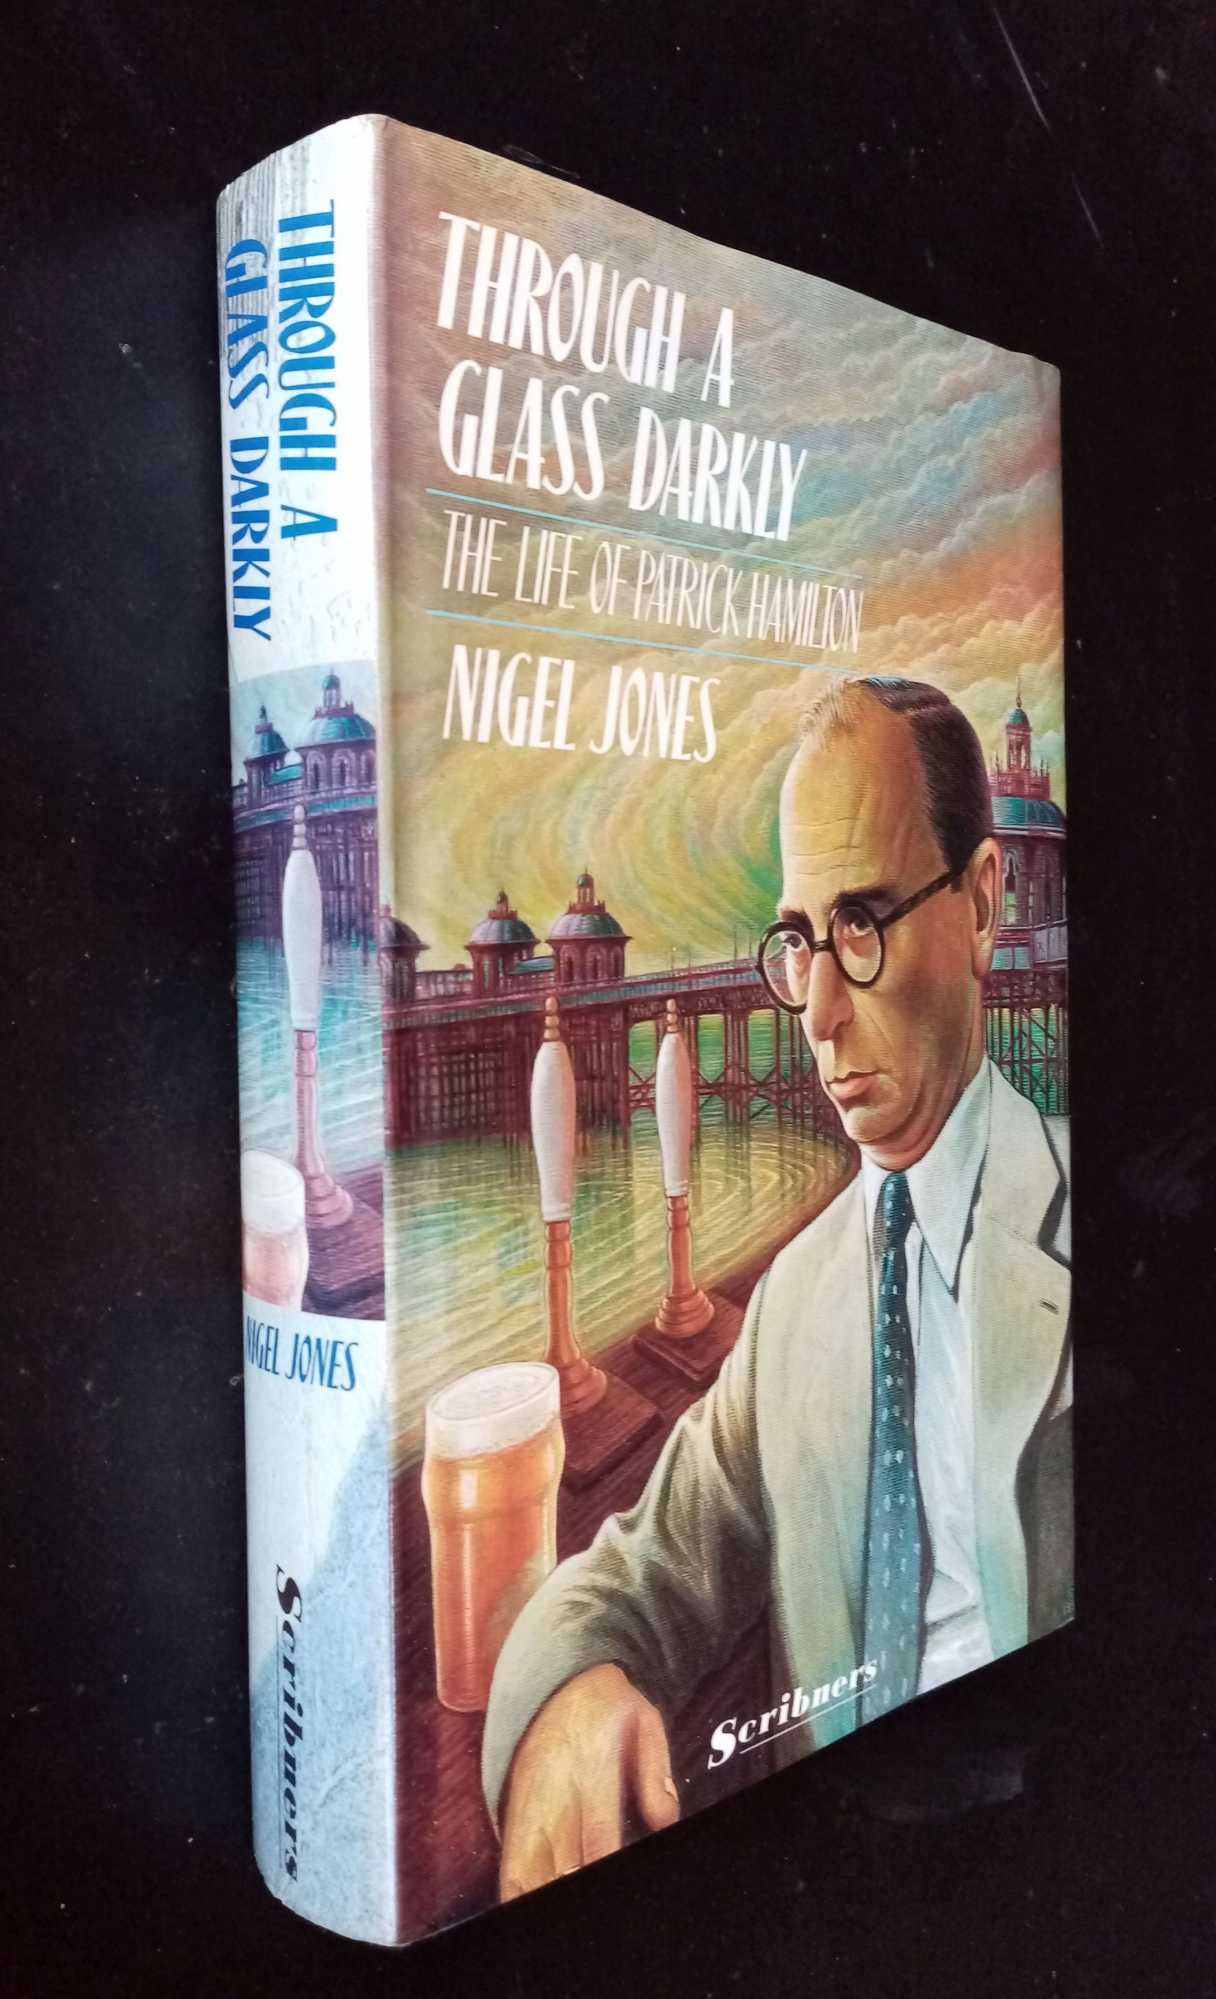 Nigel Jones - Through A Glass Darkly: The Life of Patrick Hamilton